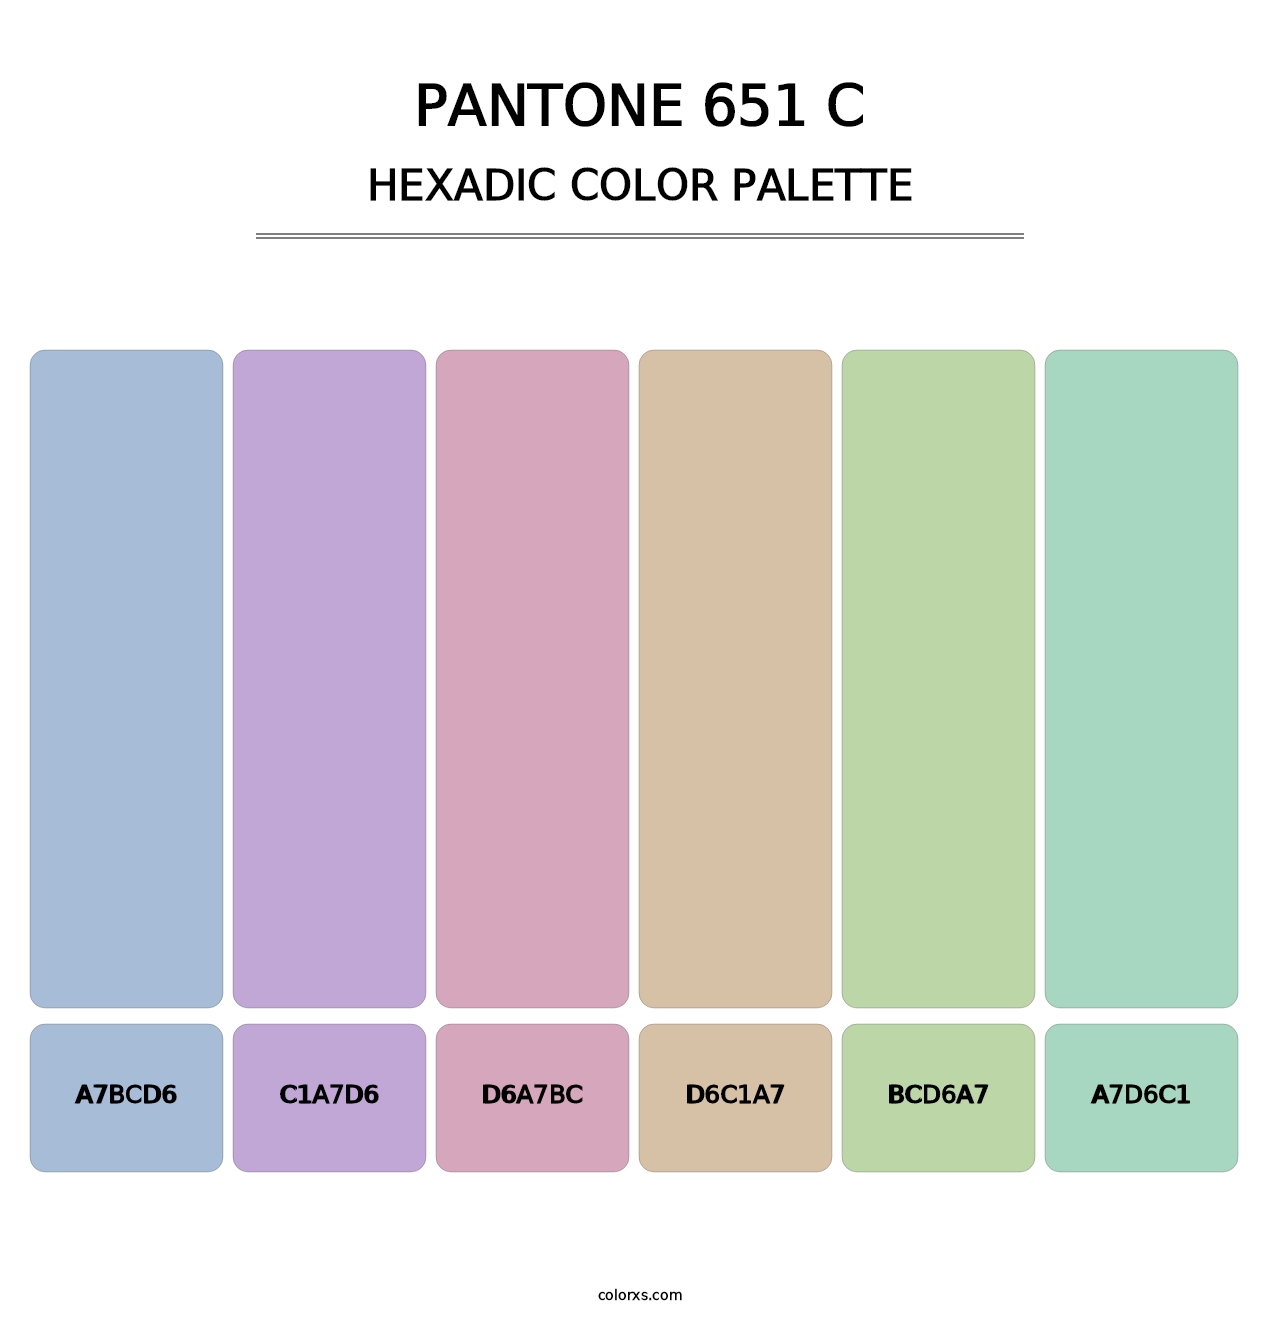 PANTONE 651 C - Hexadic Color Palette